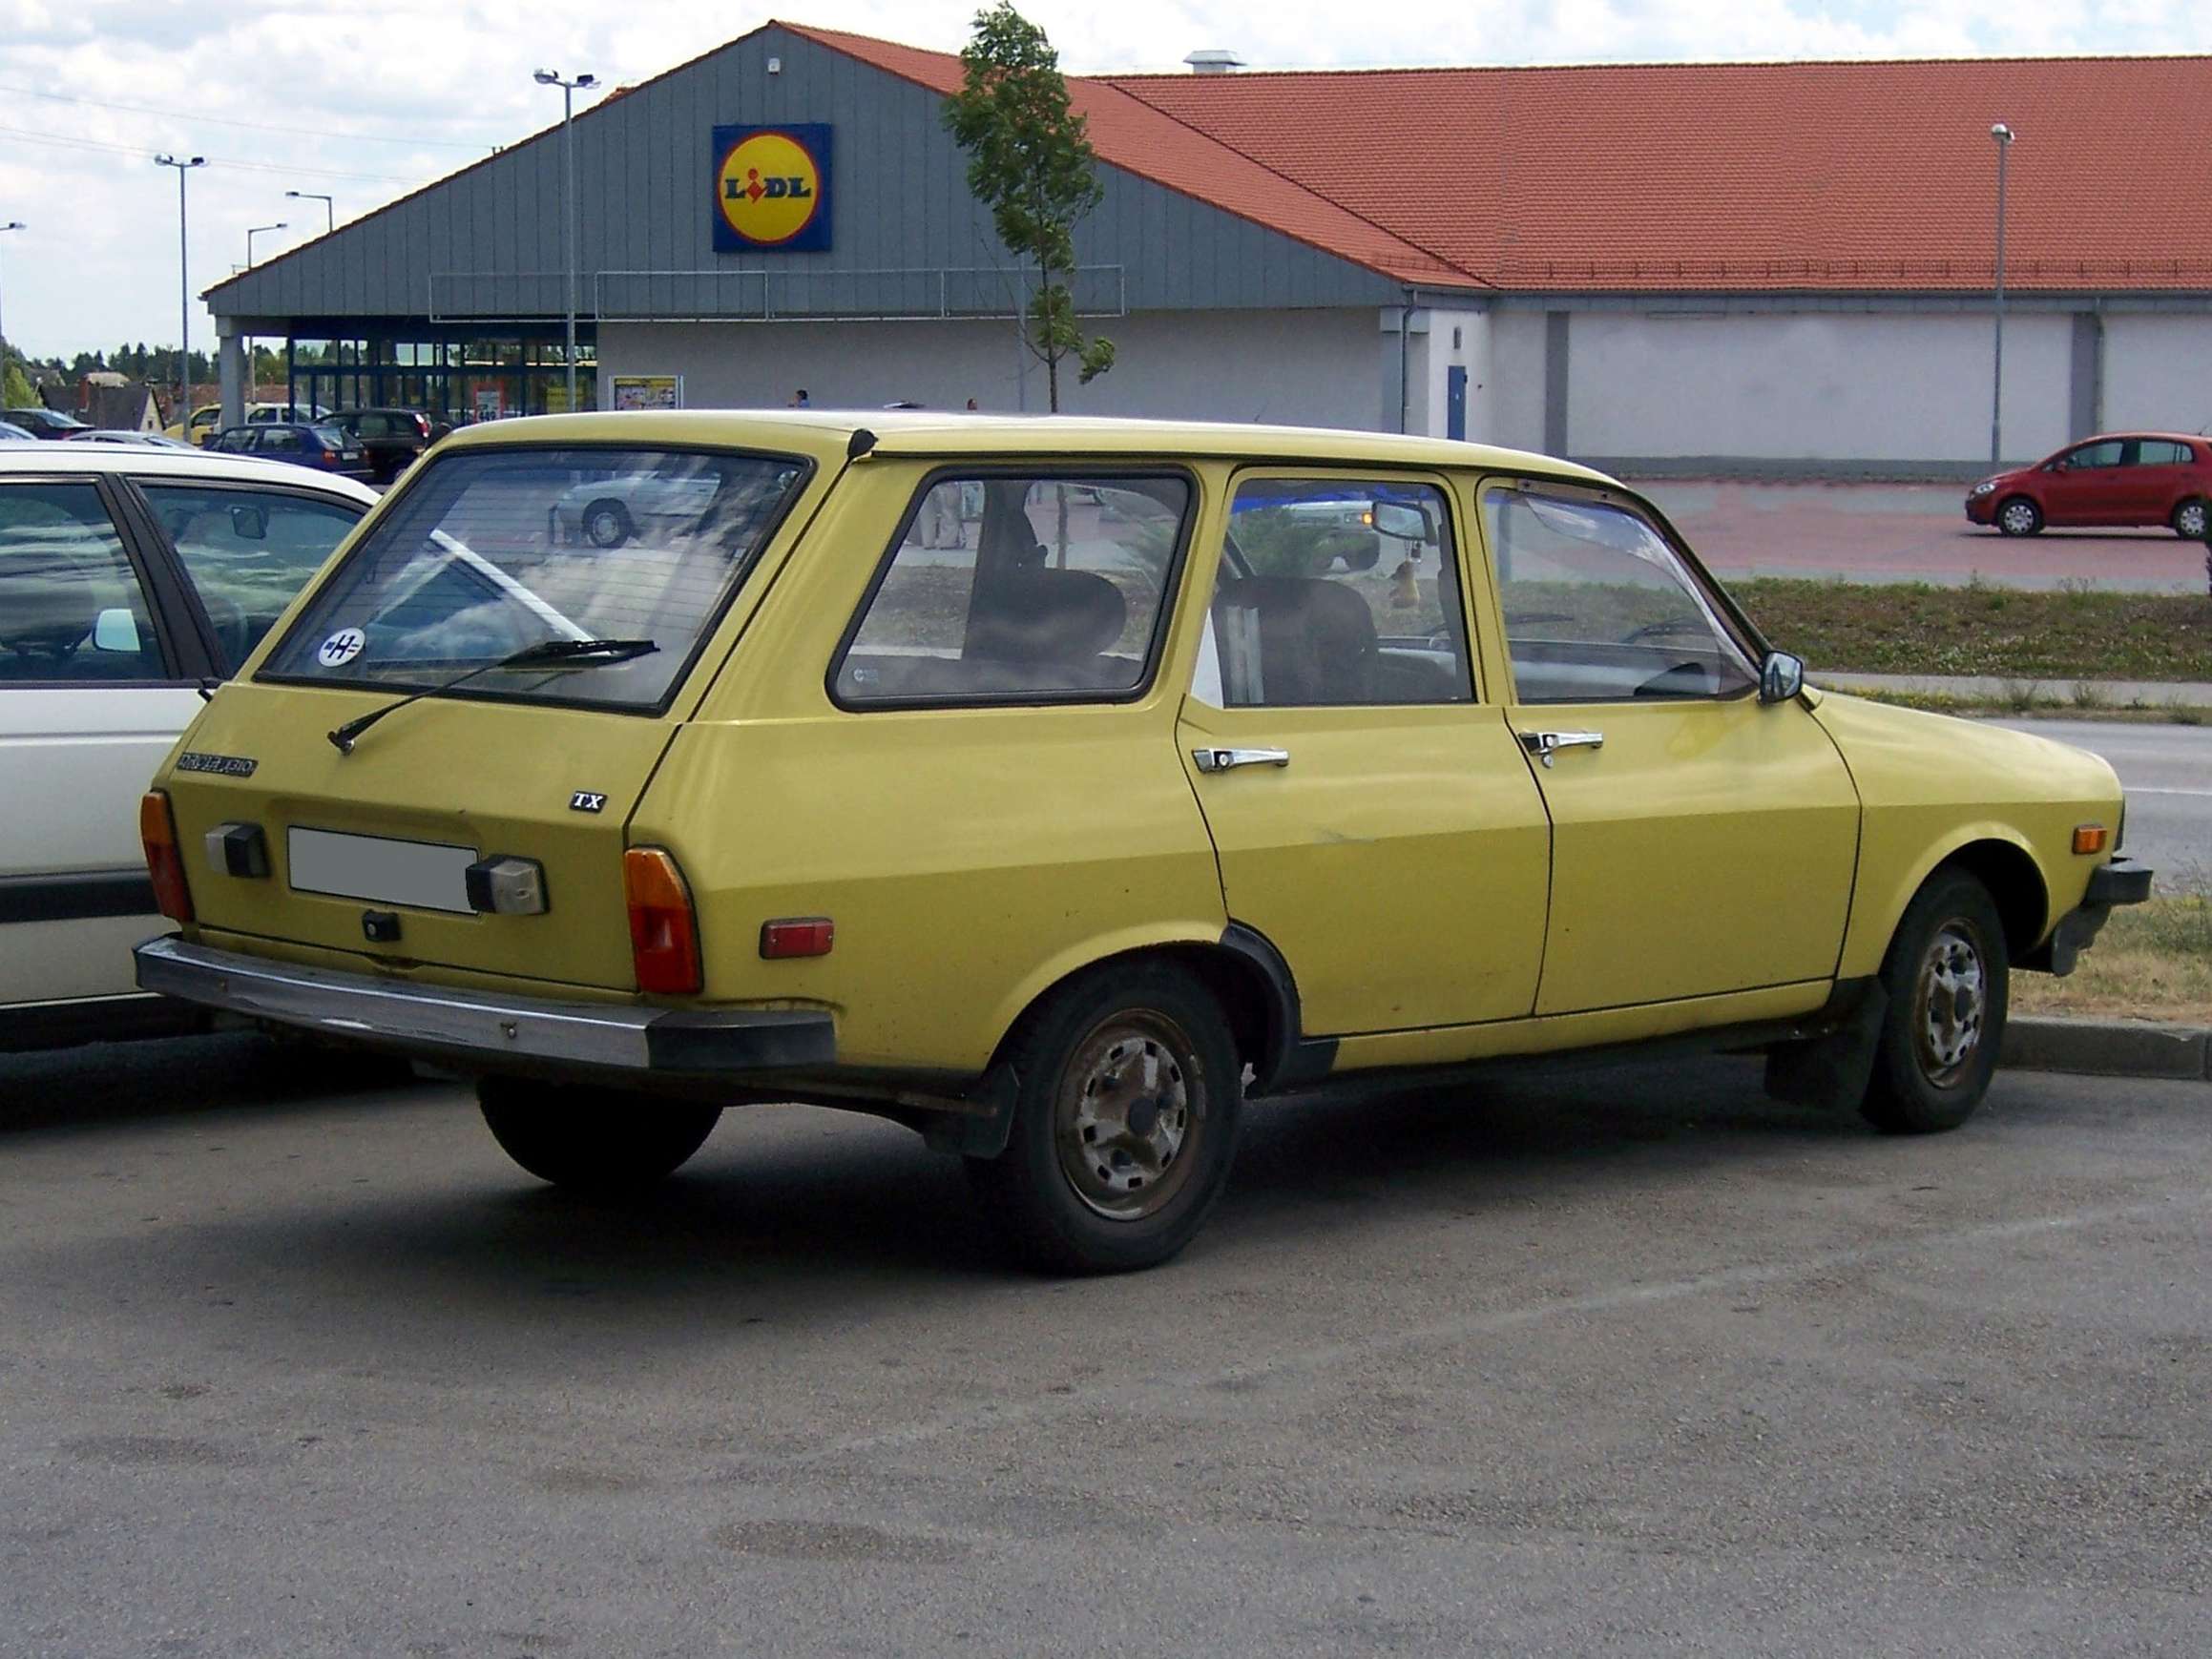 Dacia_1310